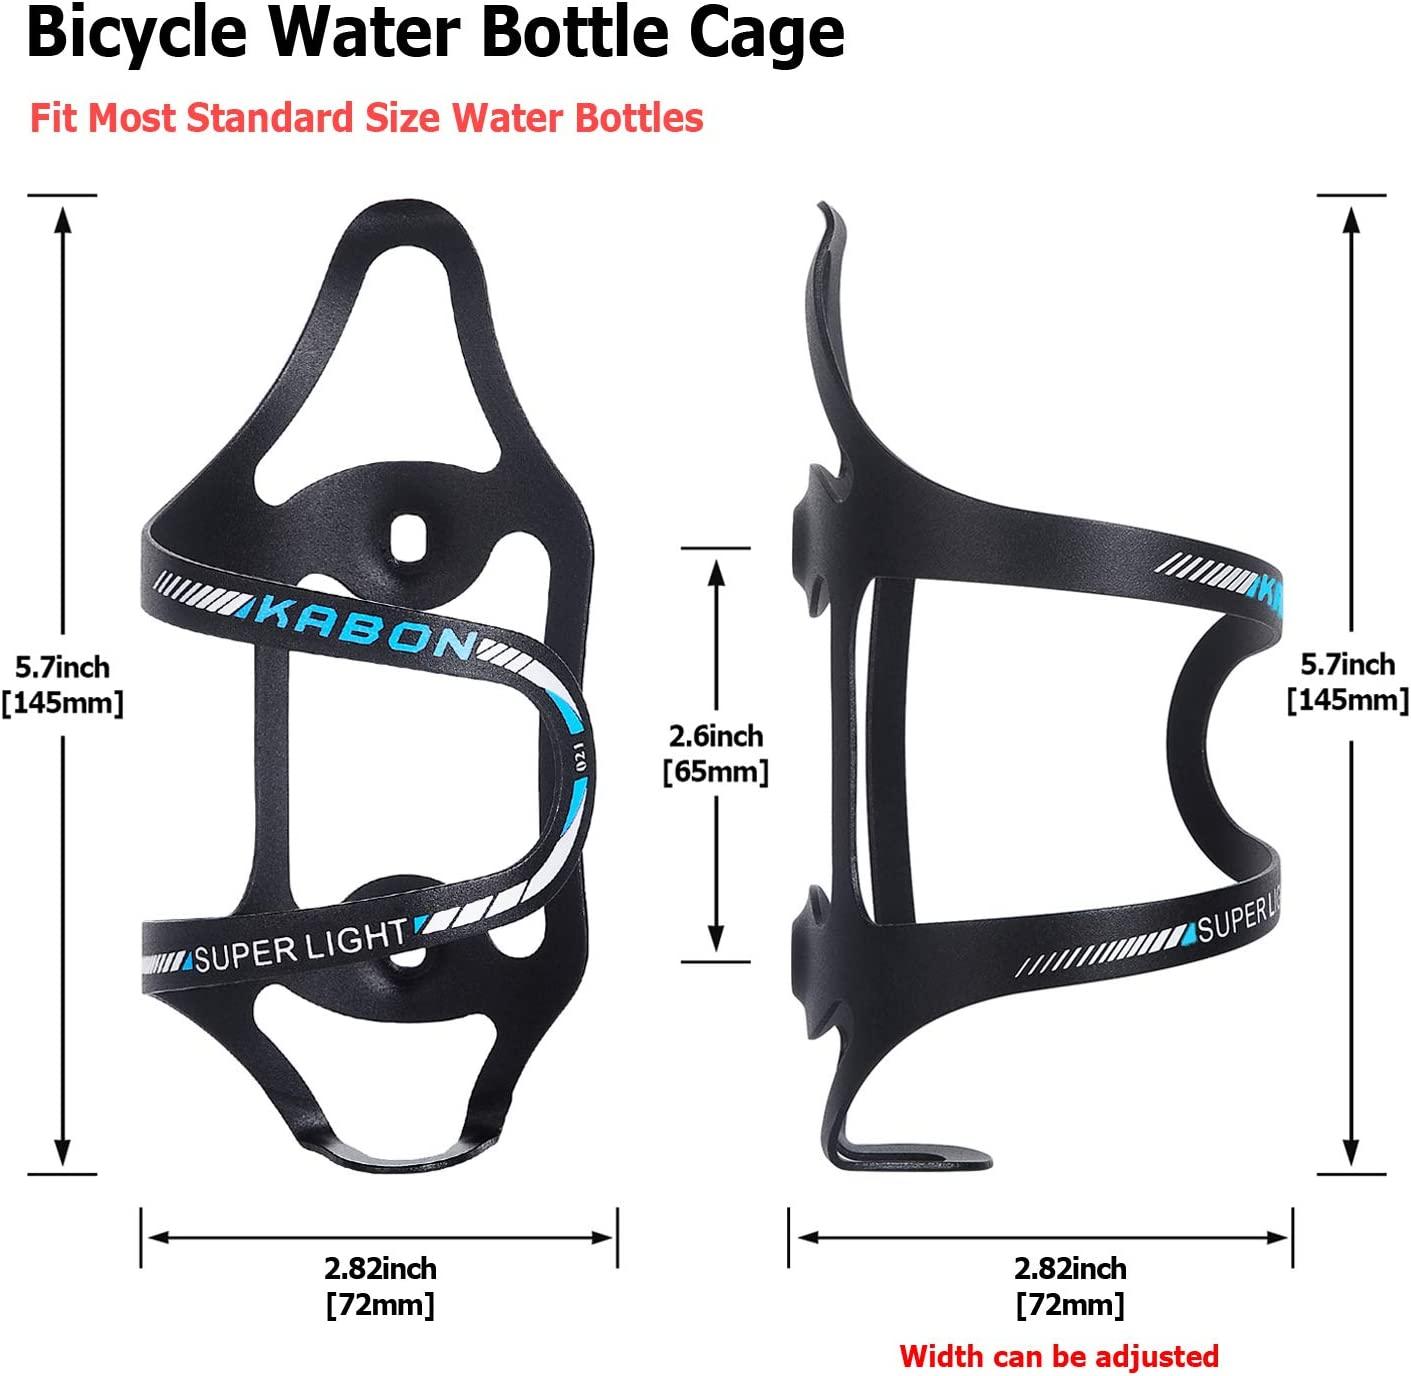  Bike Bottle Holder with Water Bottle and Mount Mountain Bike  Water Bottle Holder No Screws Water Bottle Cages Bike Water Bottles, Kids Bike  Water Bottle Holder for Bike (Map Black) 